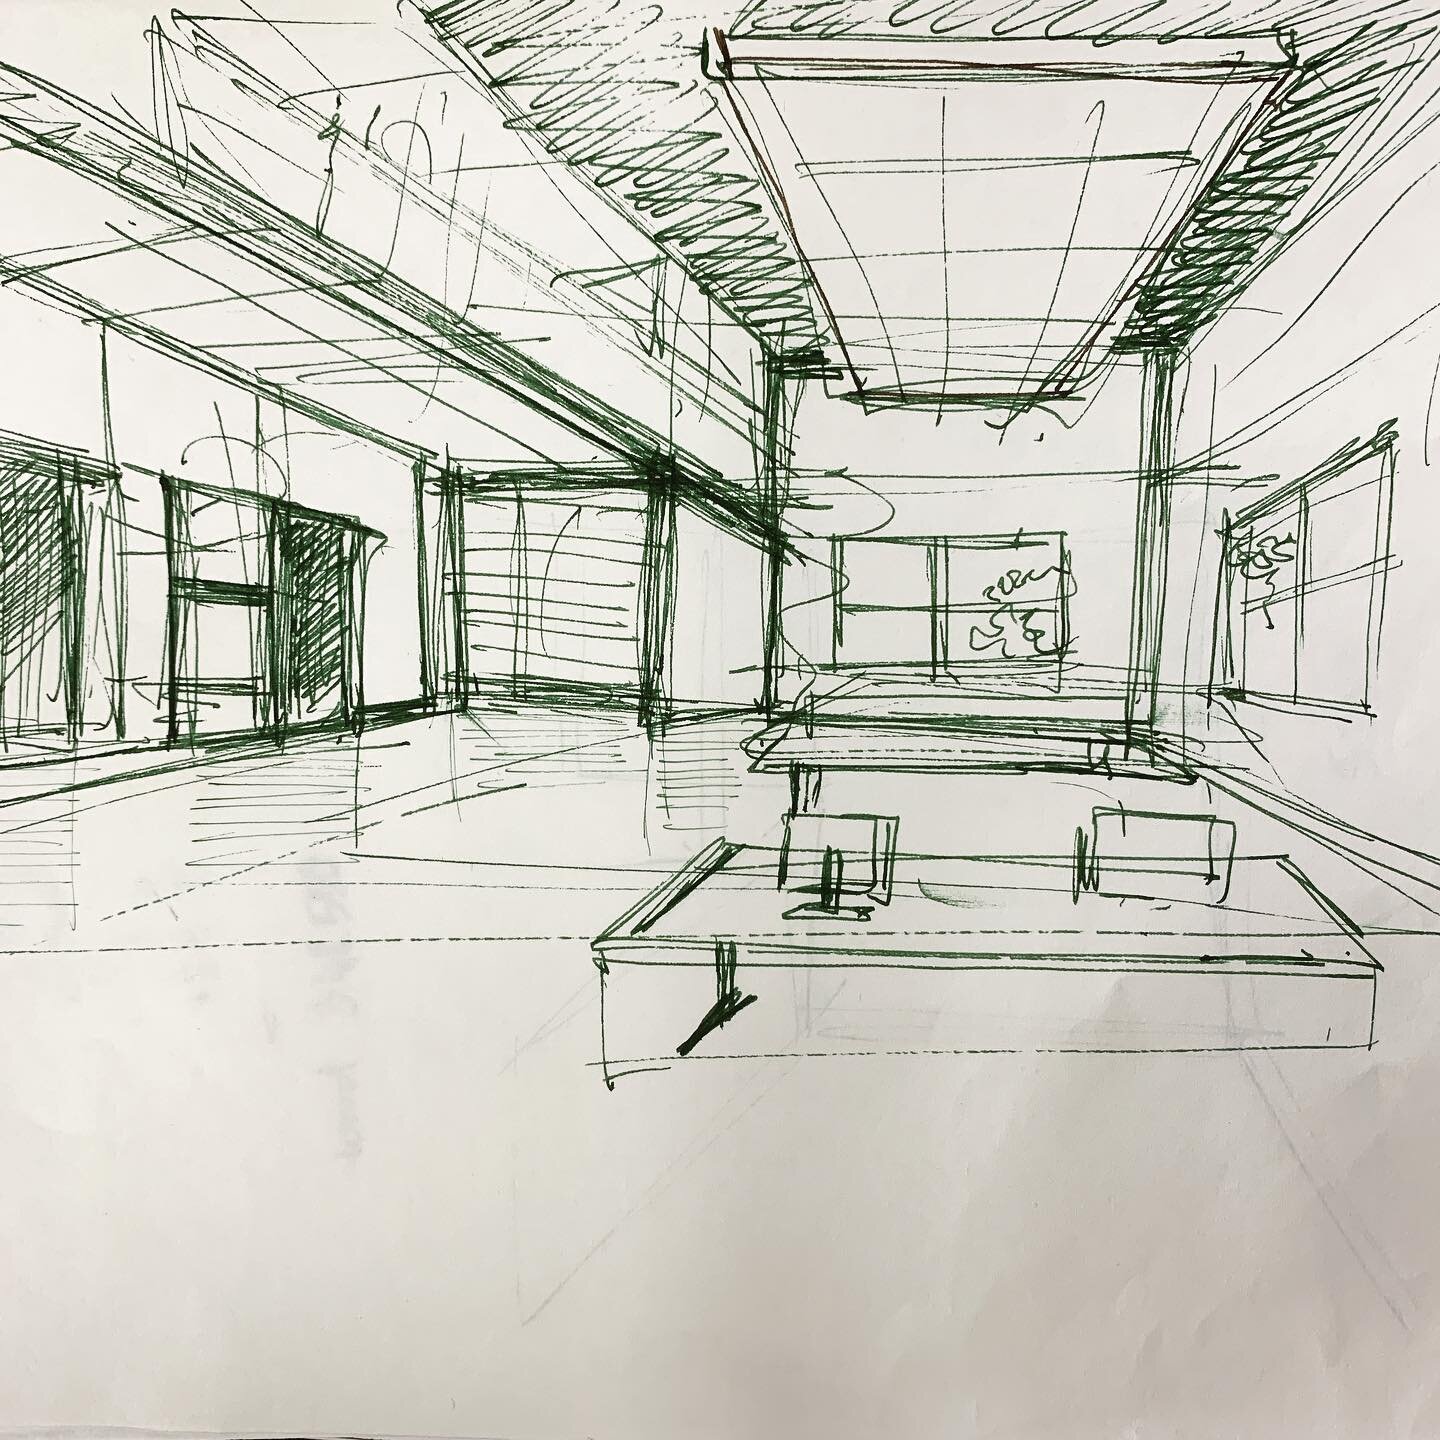 Office / warehouse interior concept sketch work #architecture #sketch #design #office #interiordesign